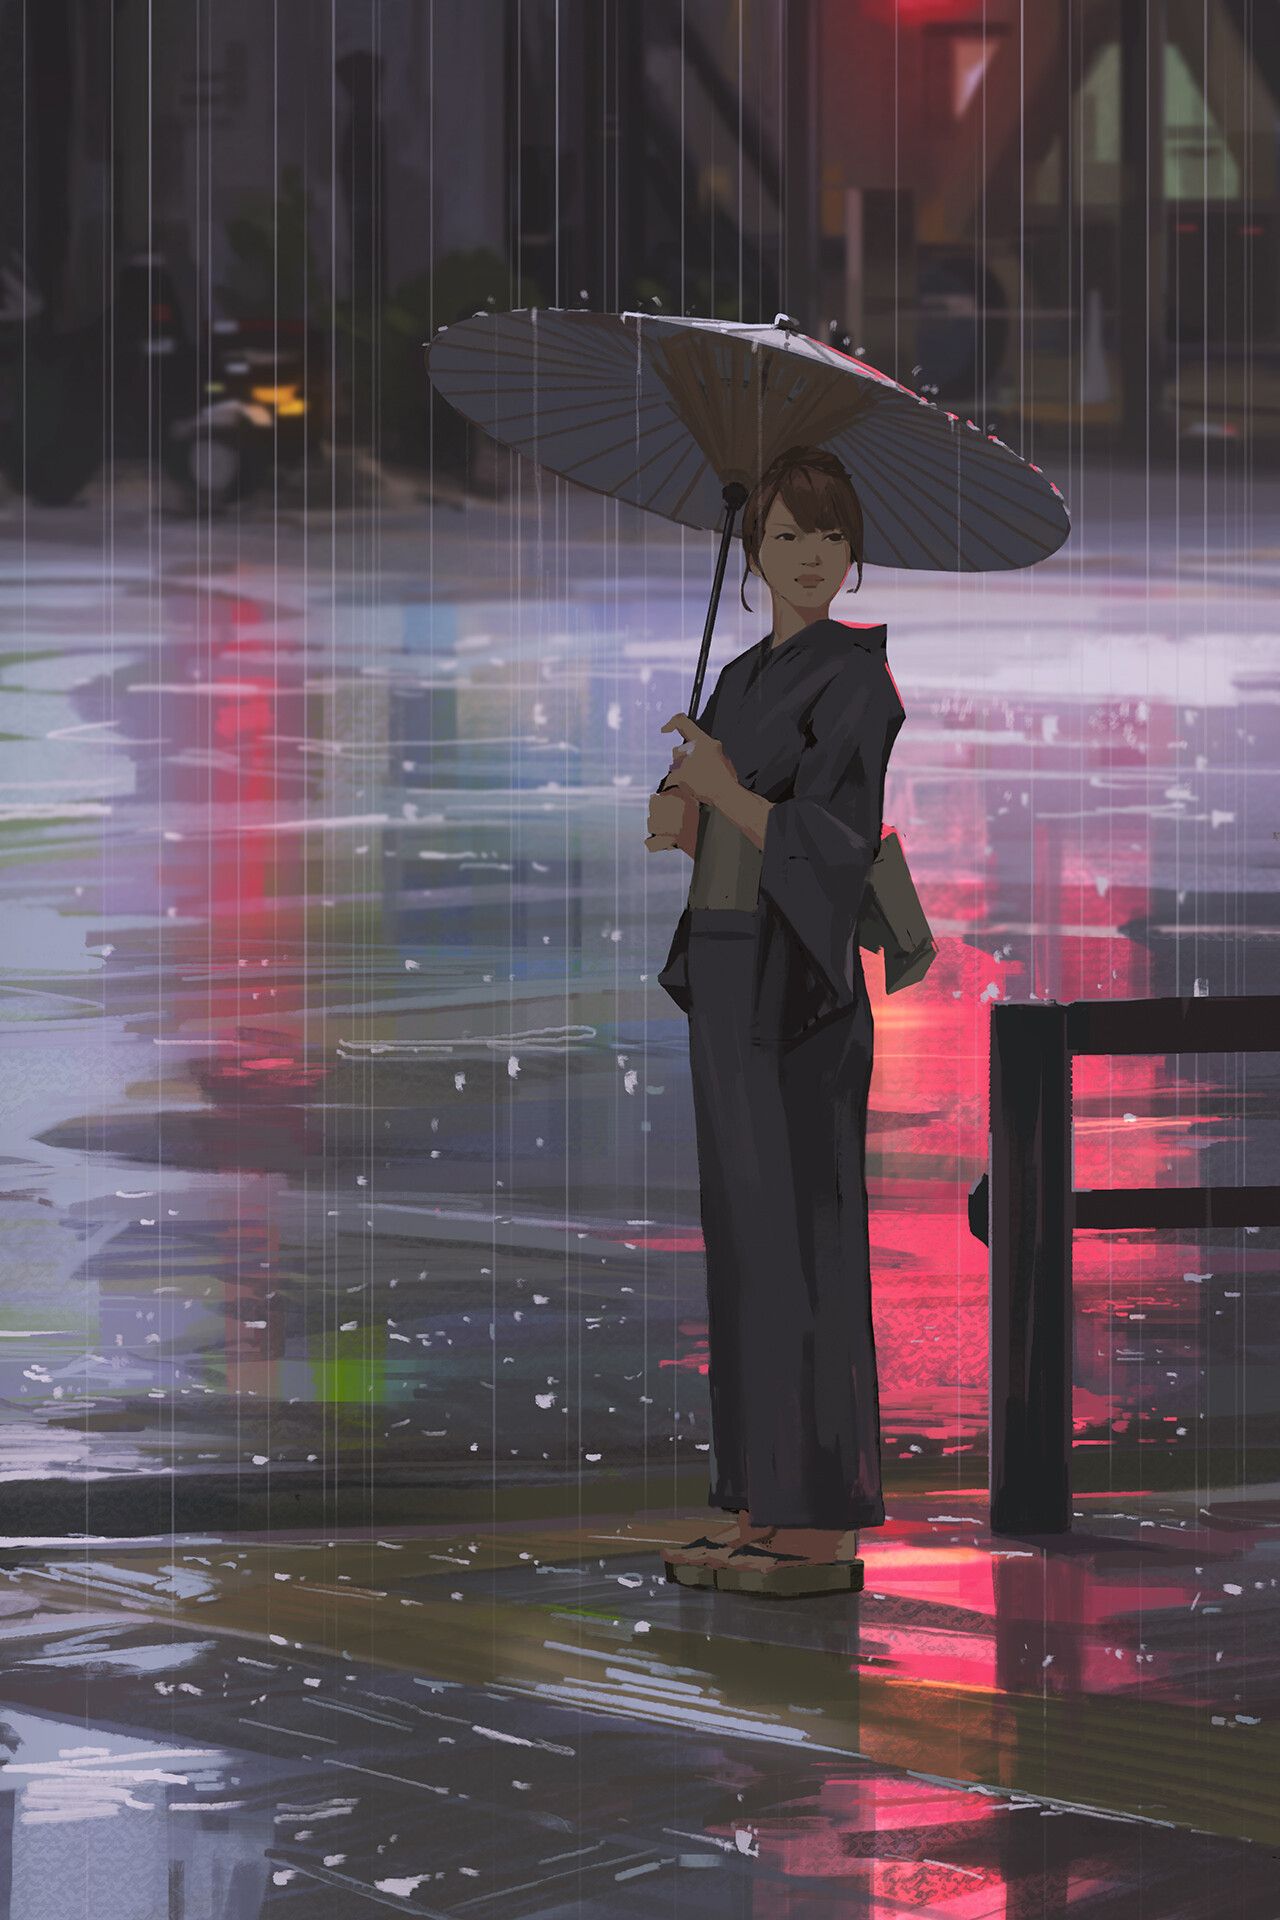 Wallpaper, women, Asian, rain, Asia, artwork, standing, umbrella 1280x1920